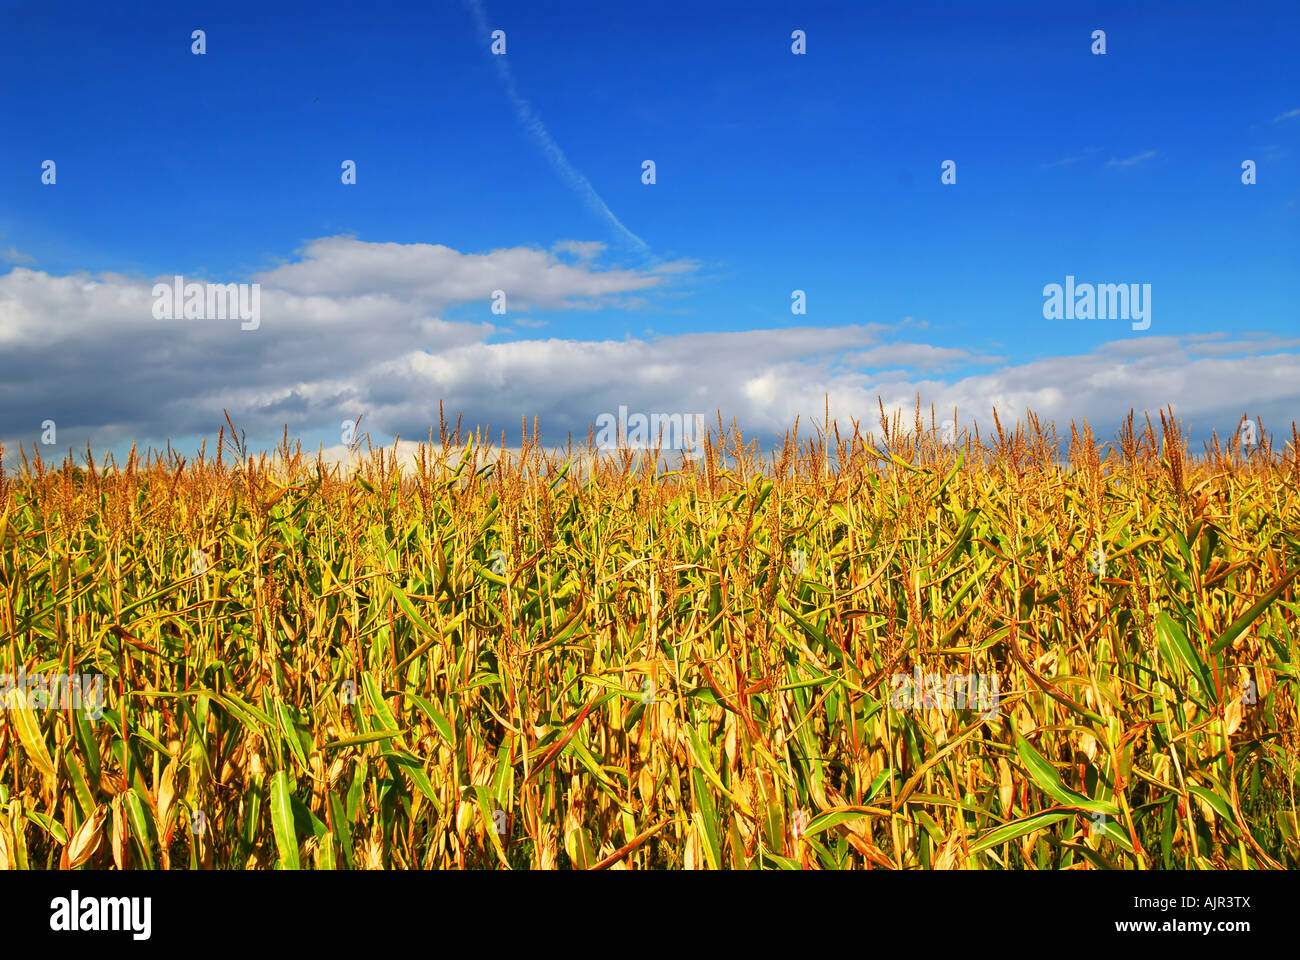 Farm field with growing corn under blue sky Stock Photo